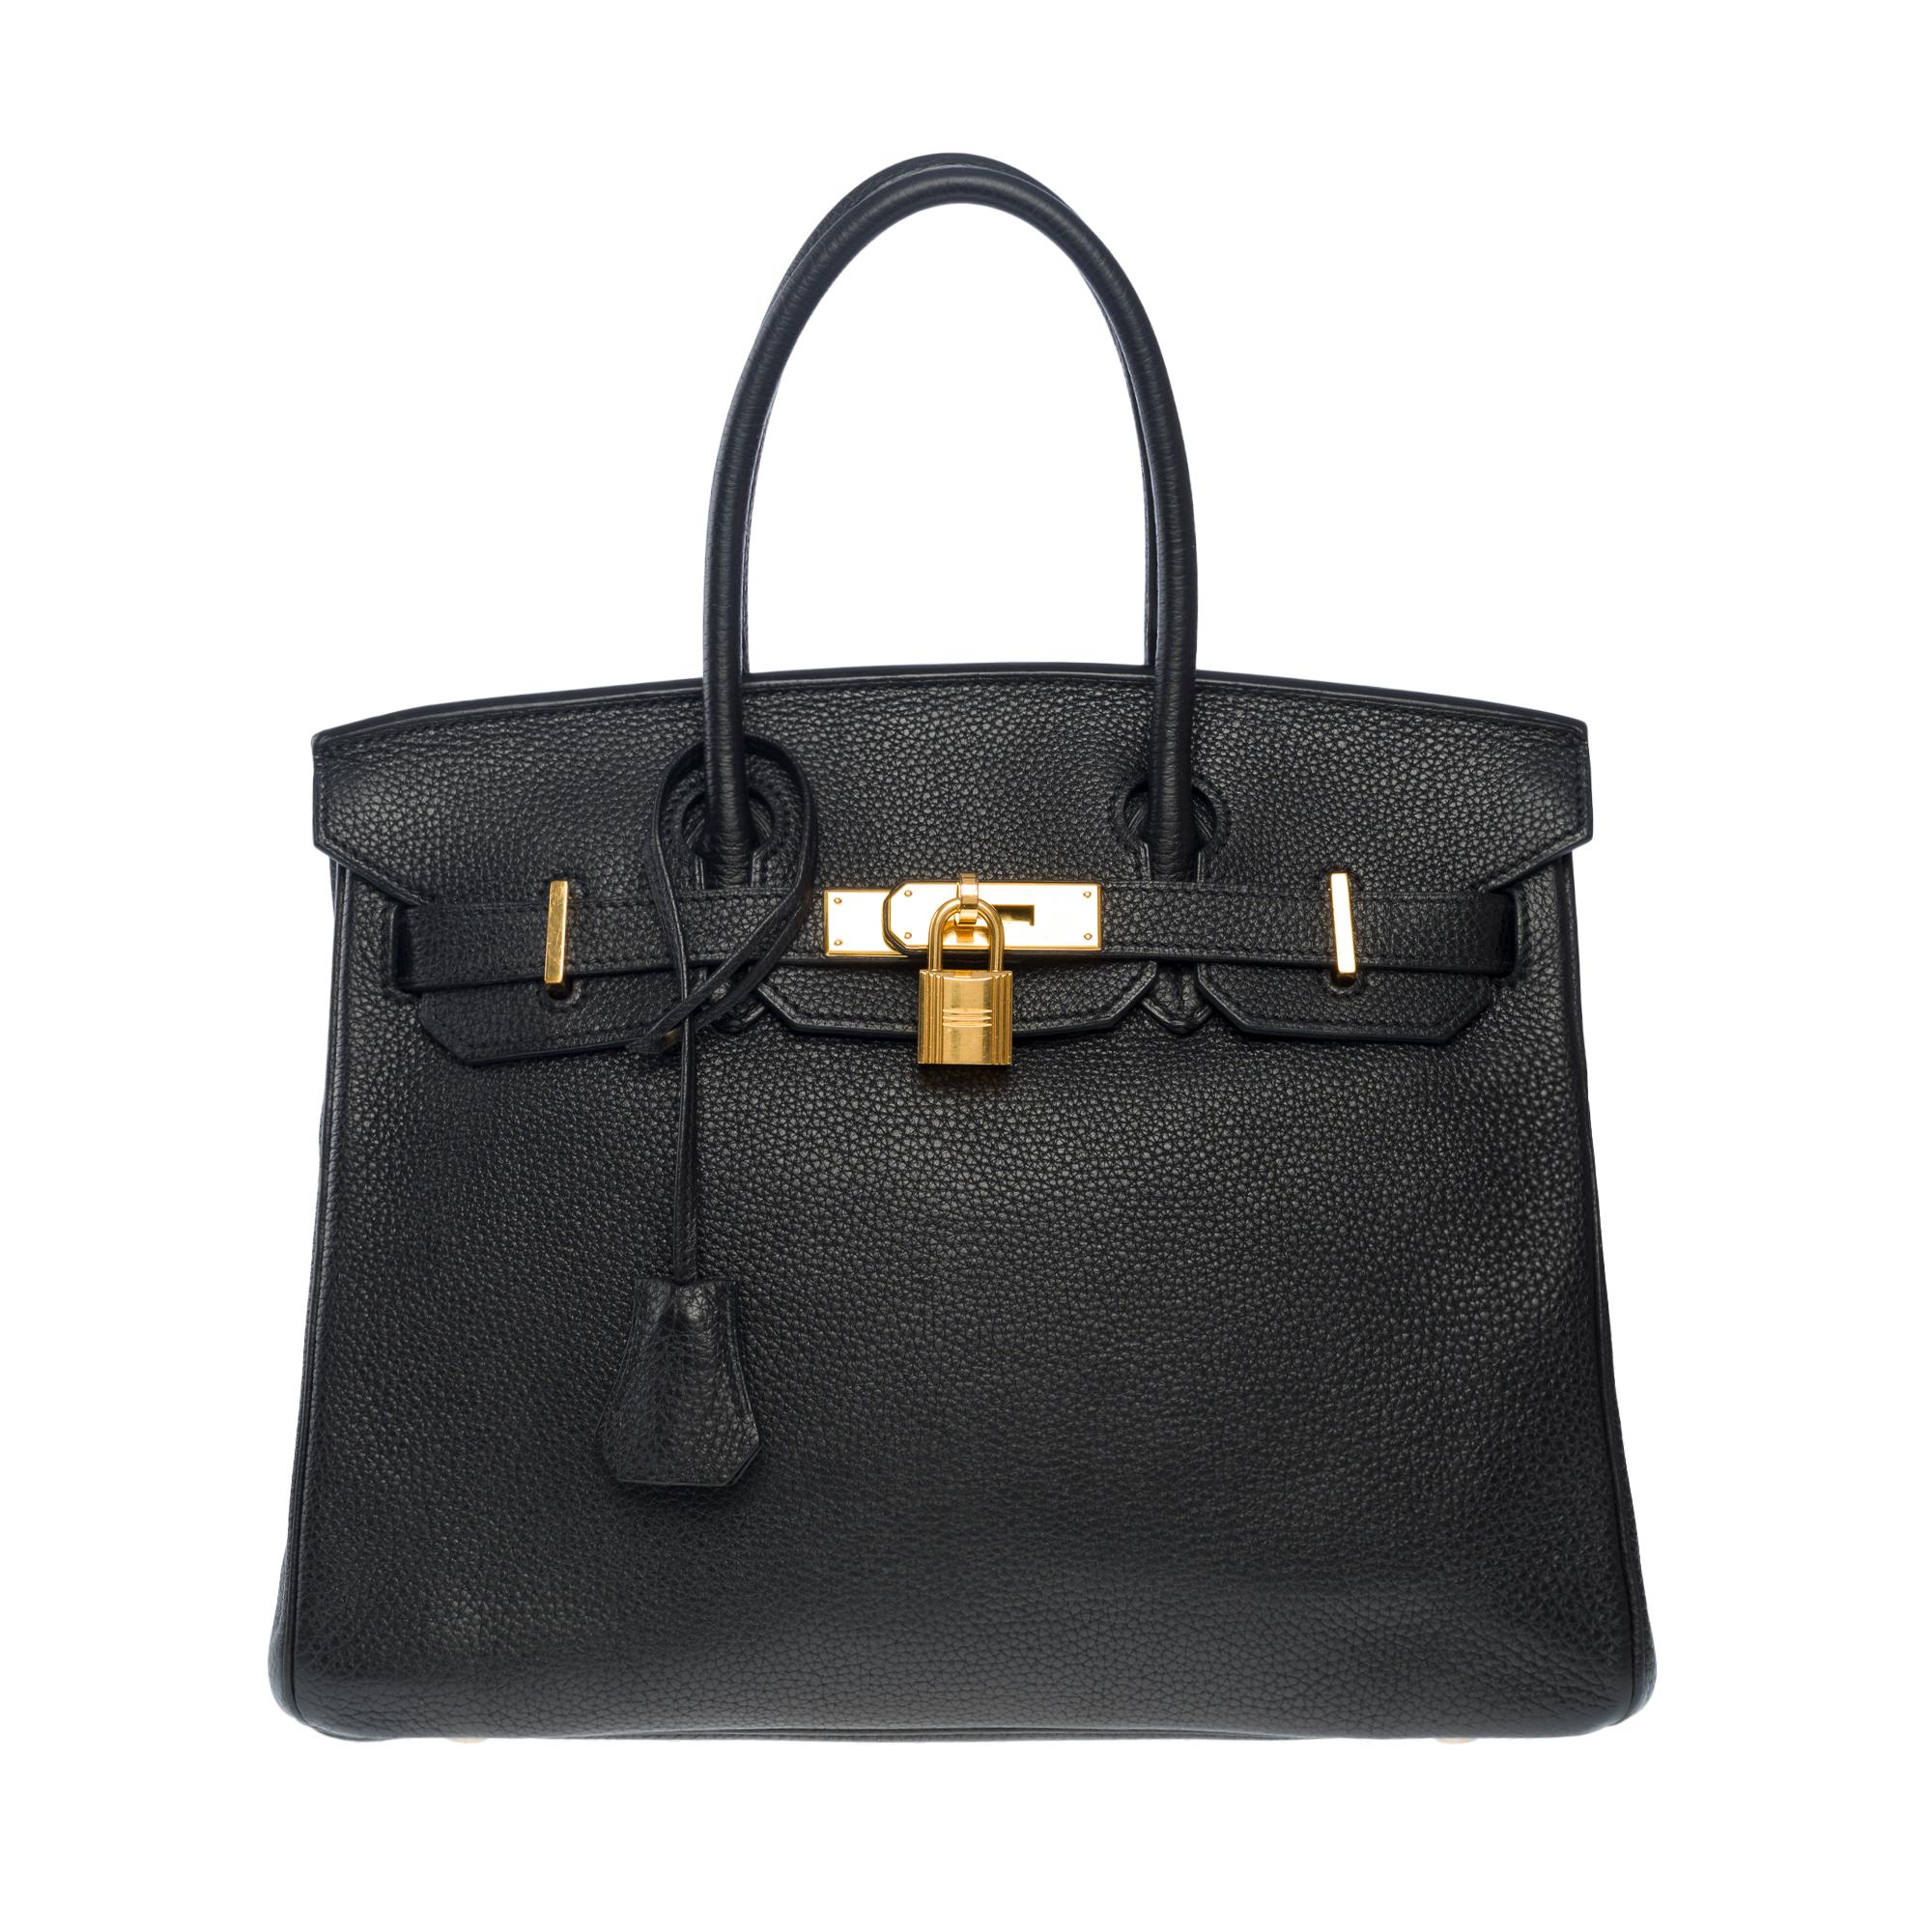 Women's Stunning Hermes Birkin 30 handbag in Black Togo leather, GHW